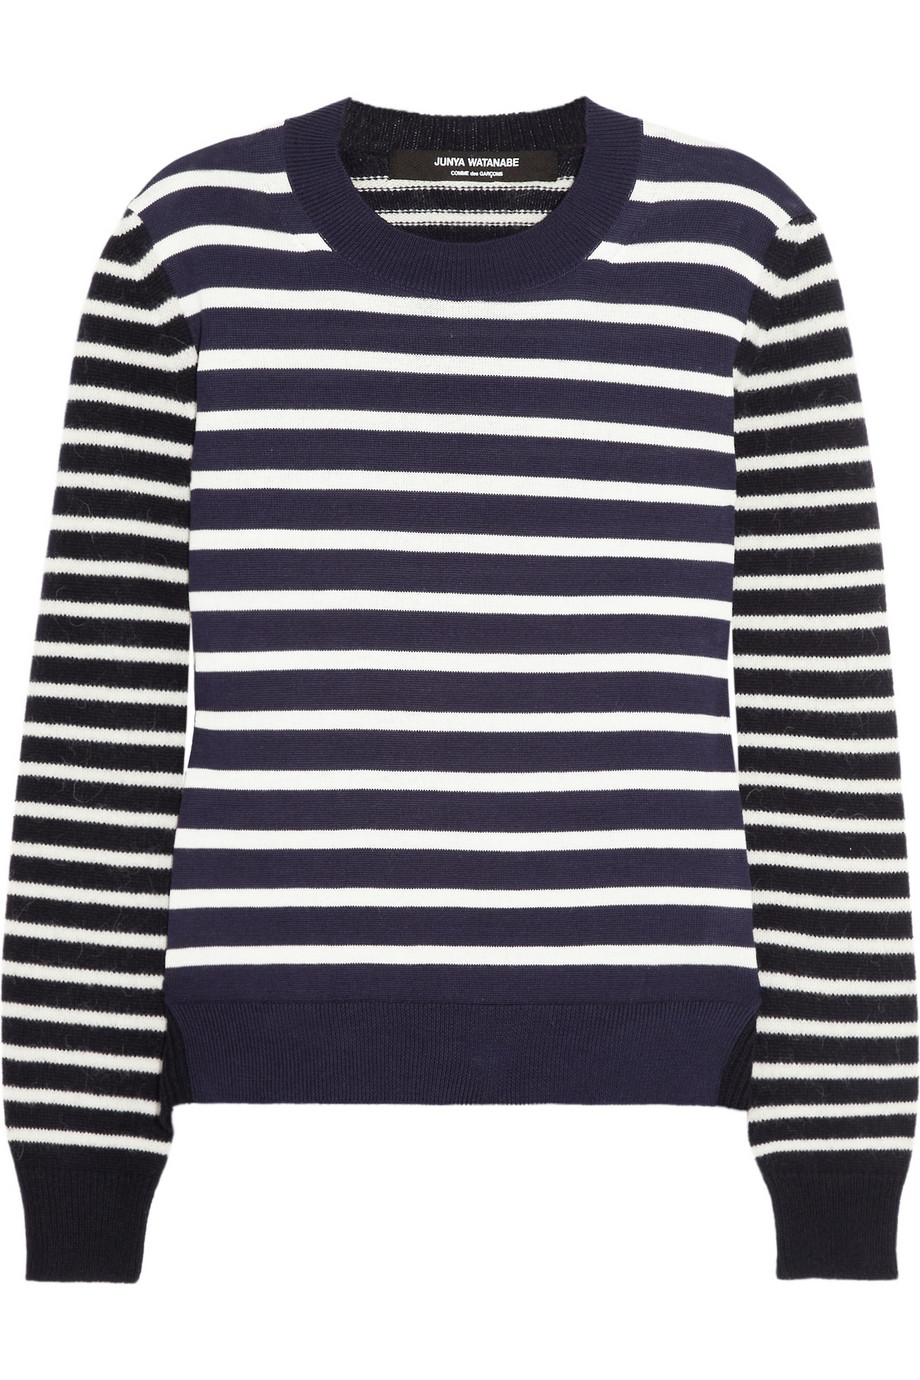 Junya watanabe Striped Sweater in Blue (navy) | Lyst